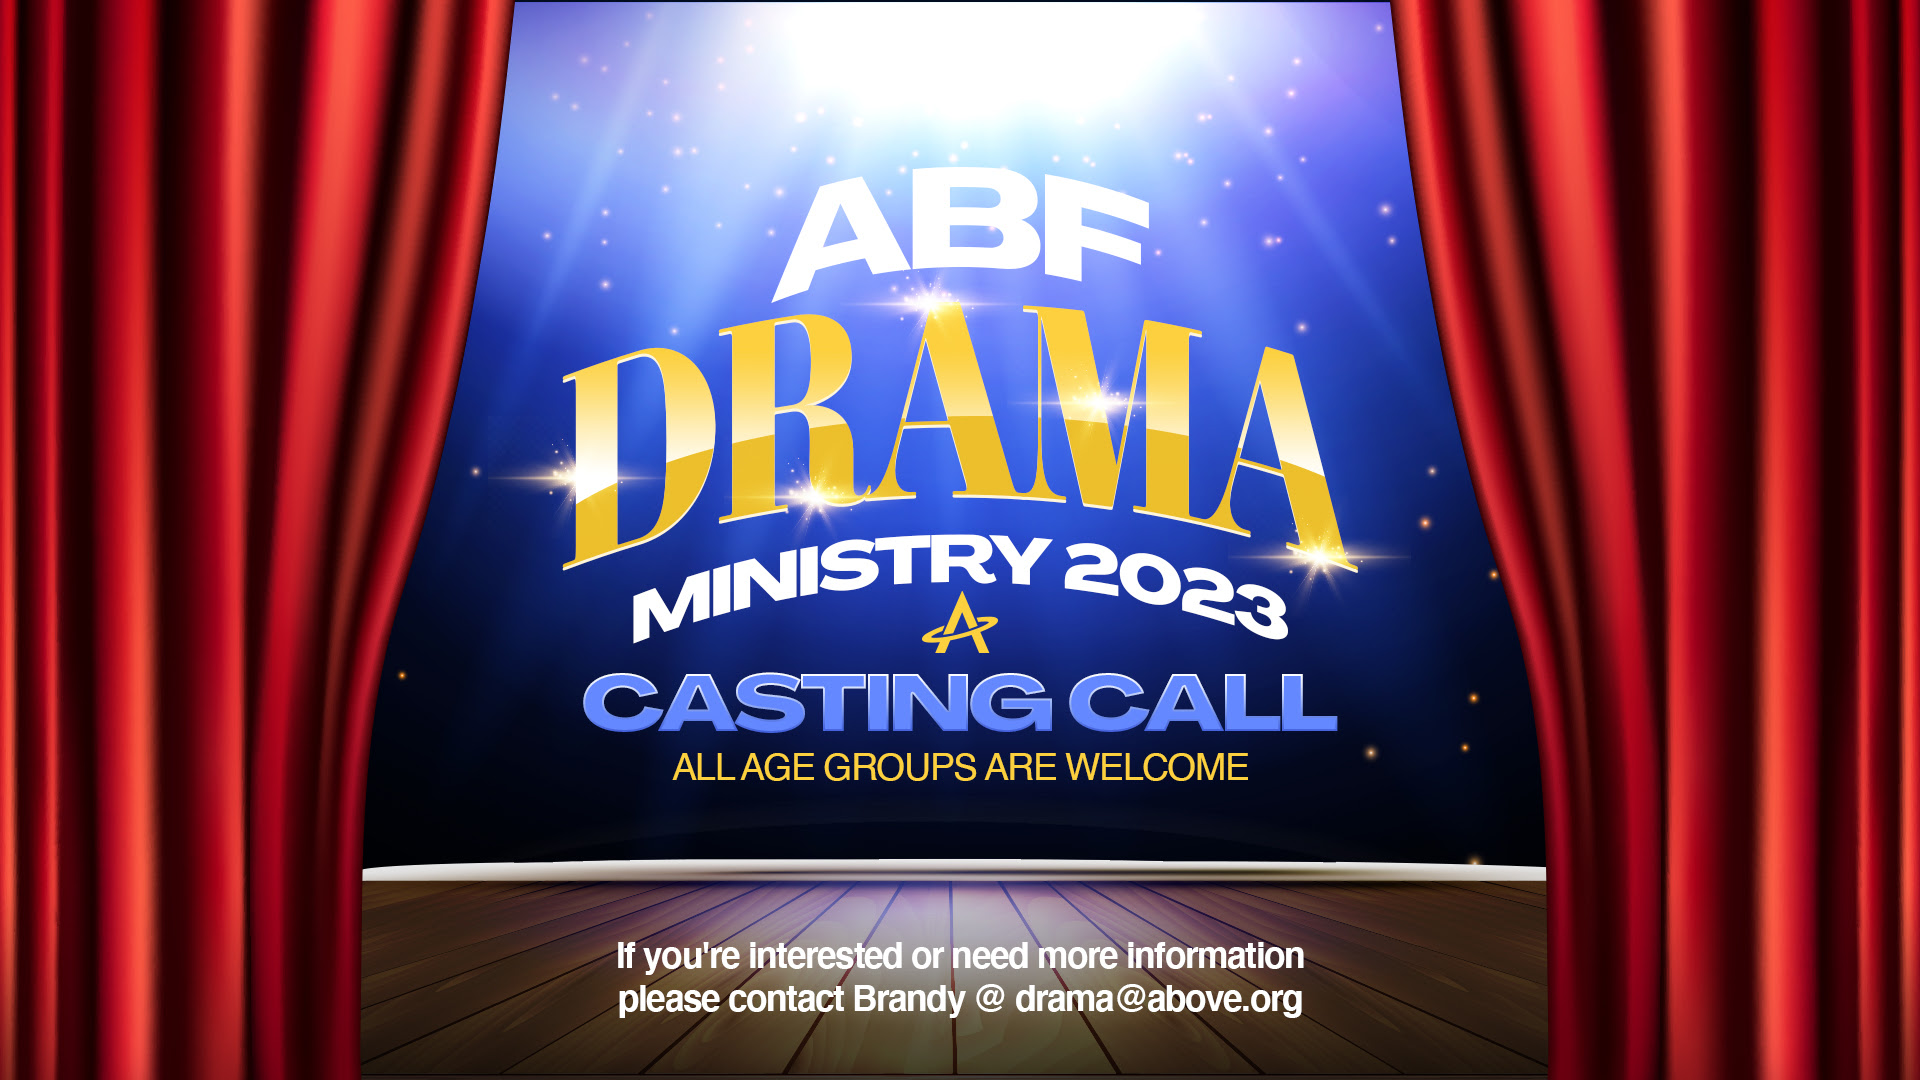 abf-drama-ministry-2023